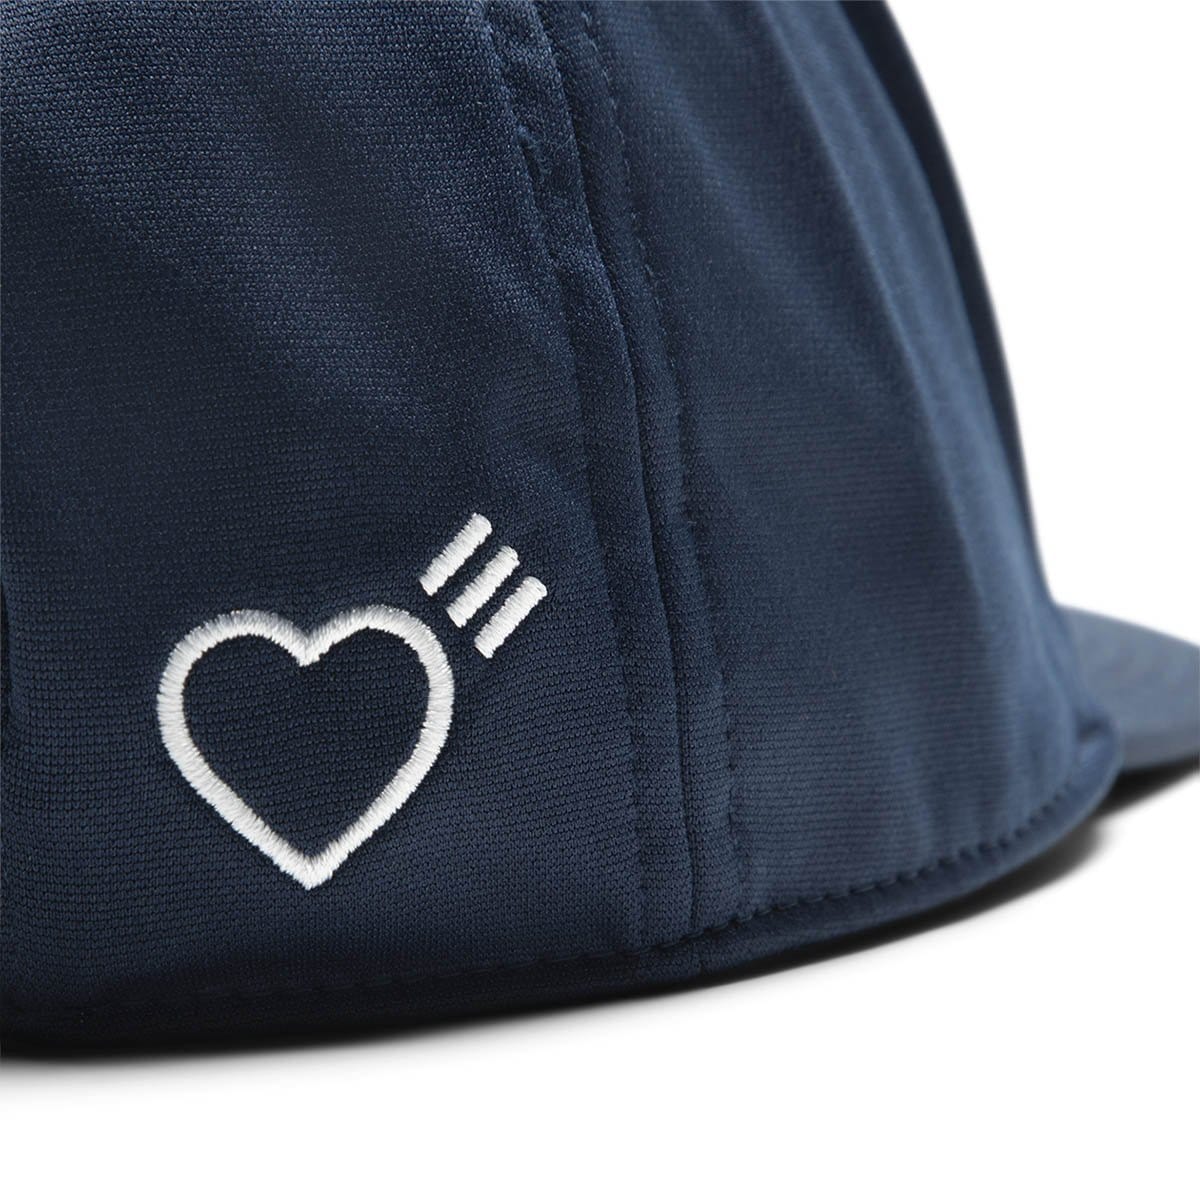 adidas Headwear COLLEGIATE NAVY / O/S x Human Made BALL CAP